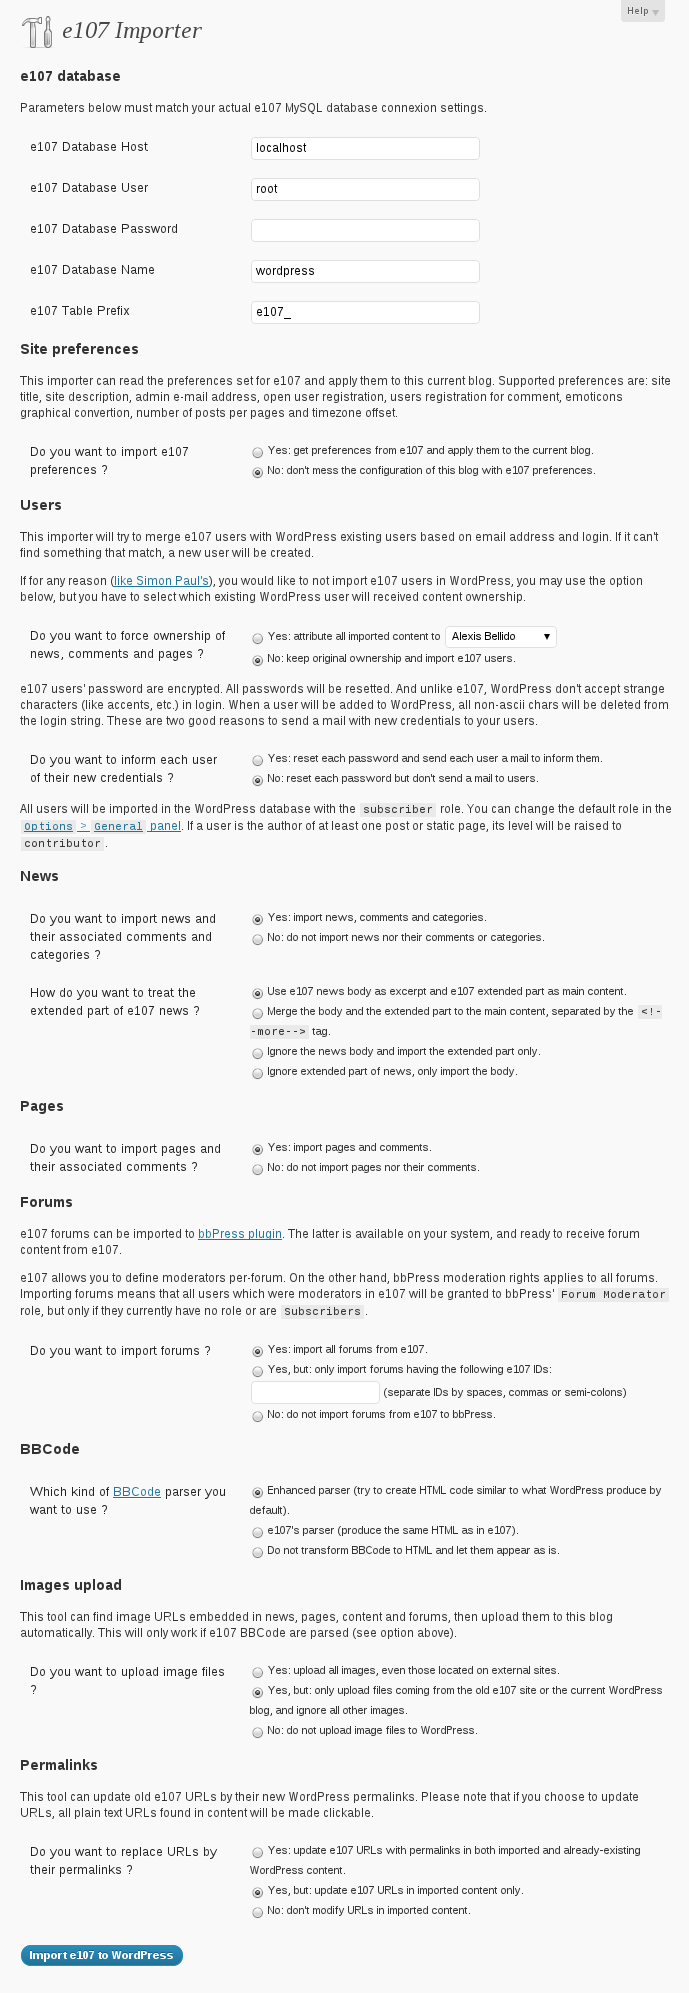 E107 Importer Preview Wordpress Plugin - Rating, Reviews, Demo & Download